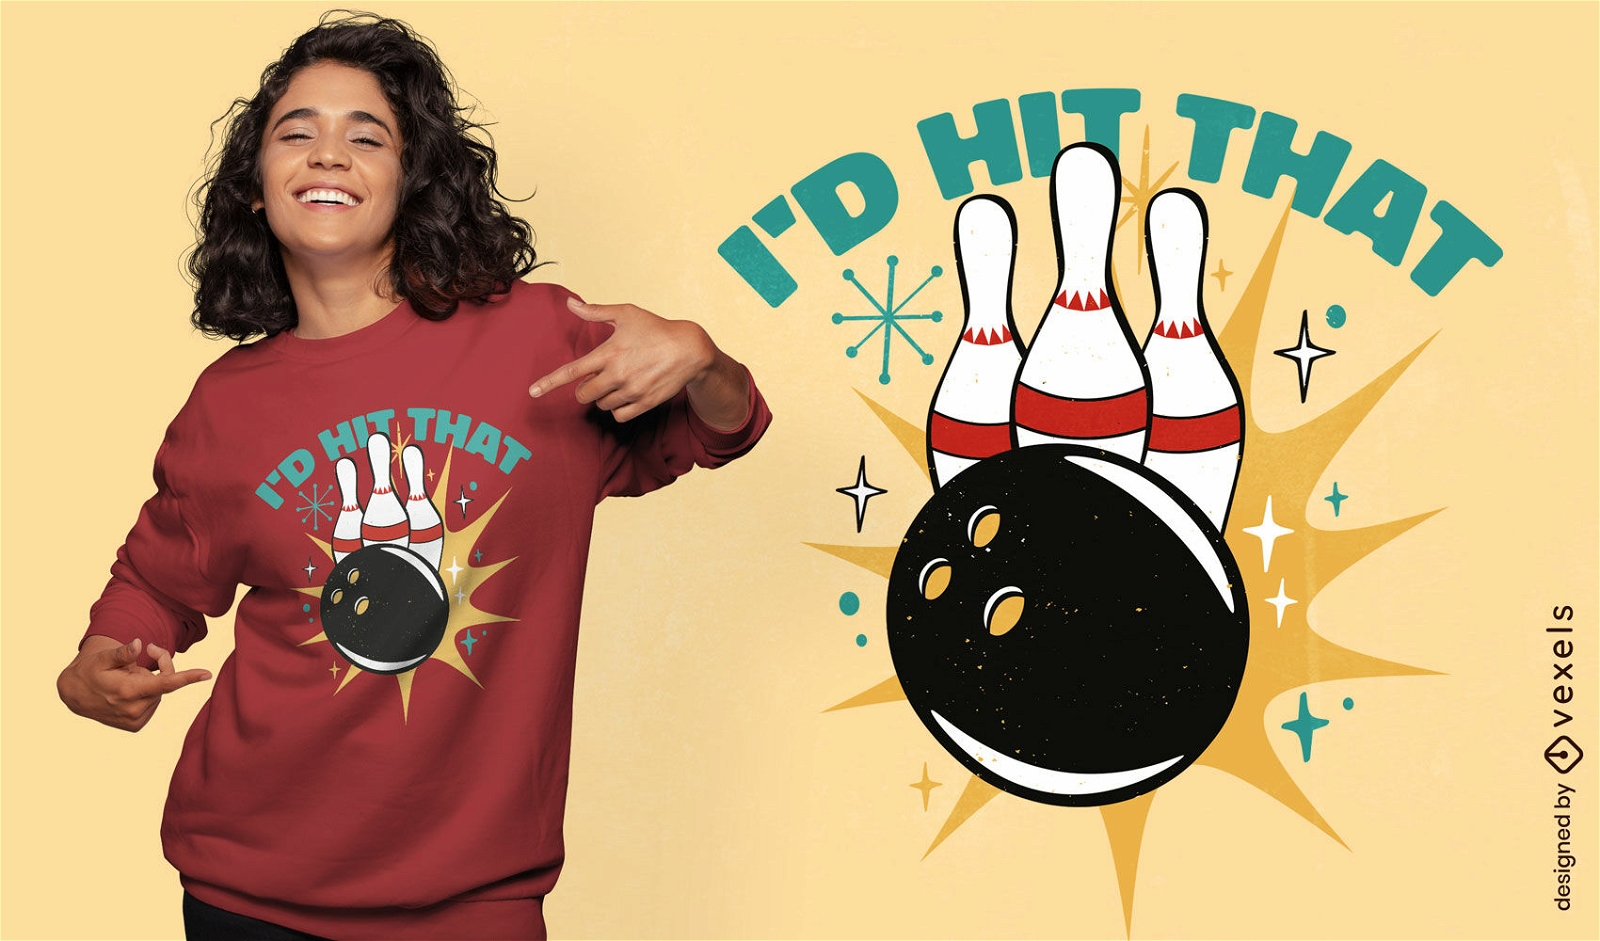 Bowling ball and pins retro t-shirt design